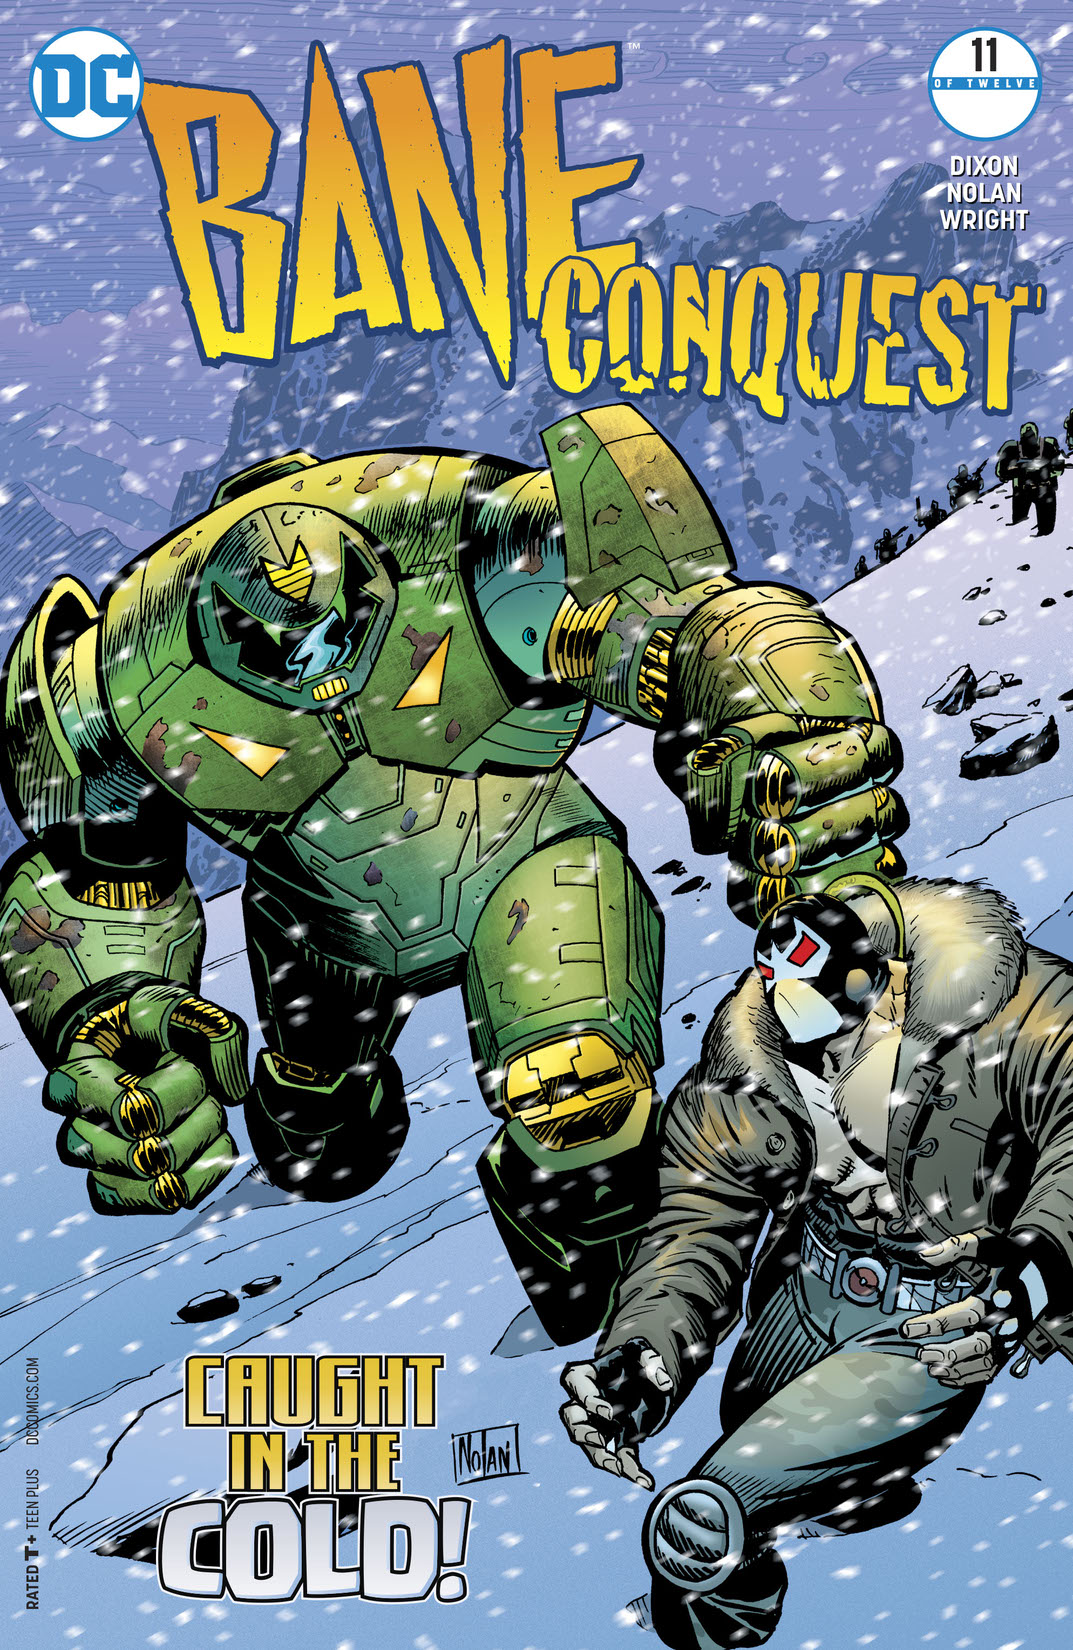 Bane: Conquest #11 preview images